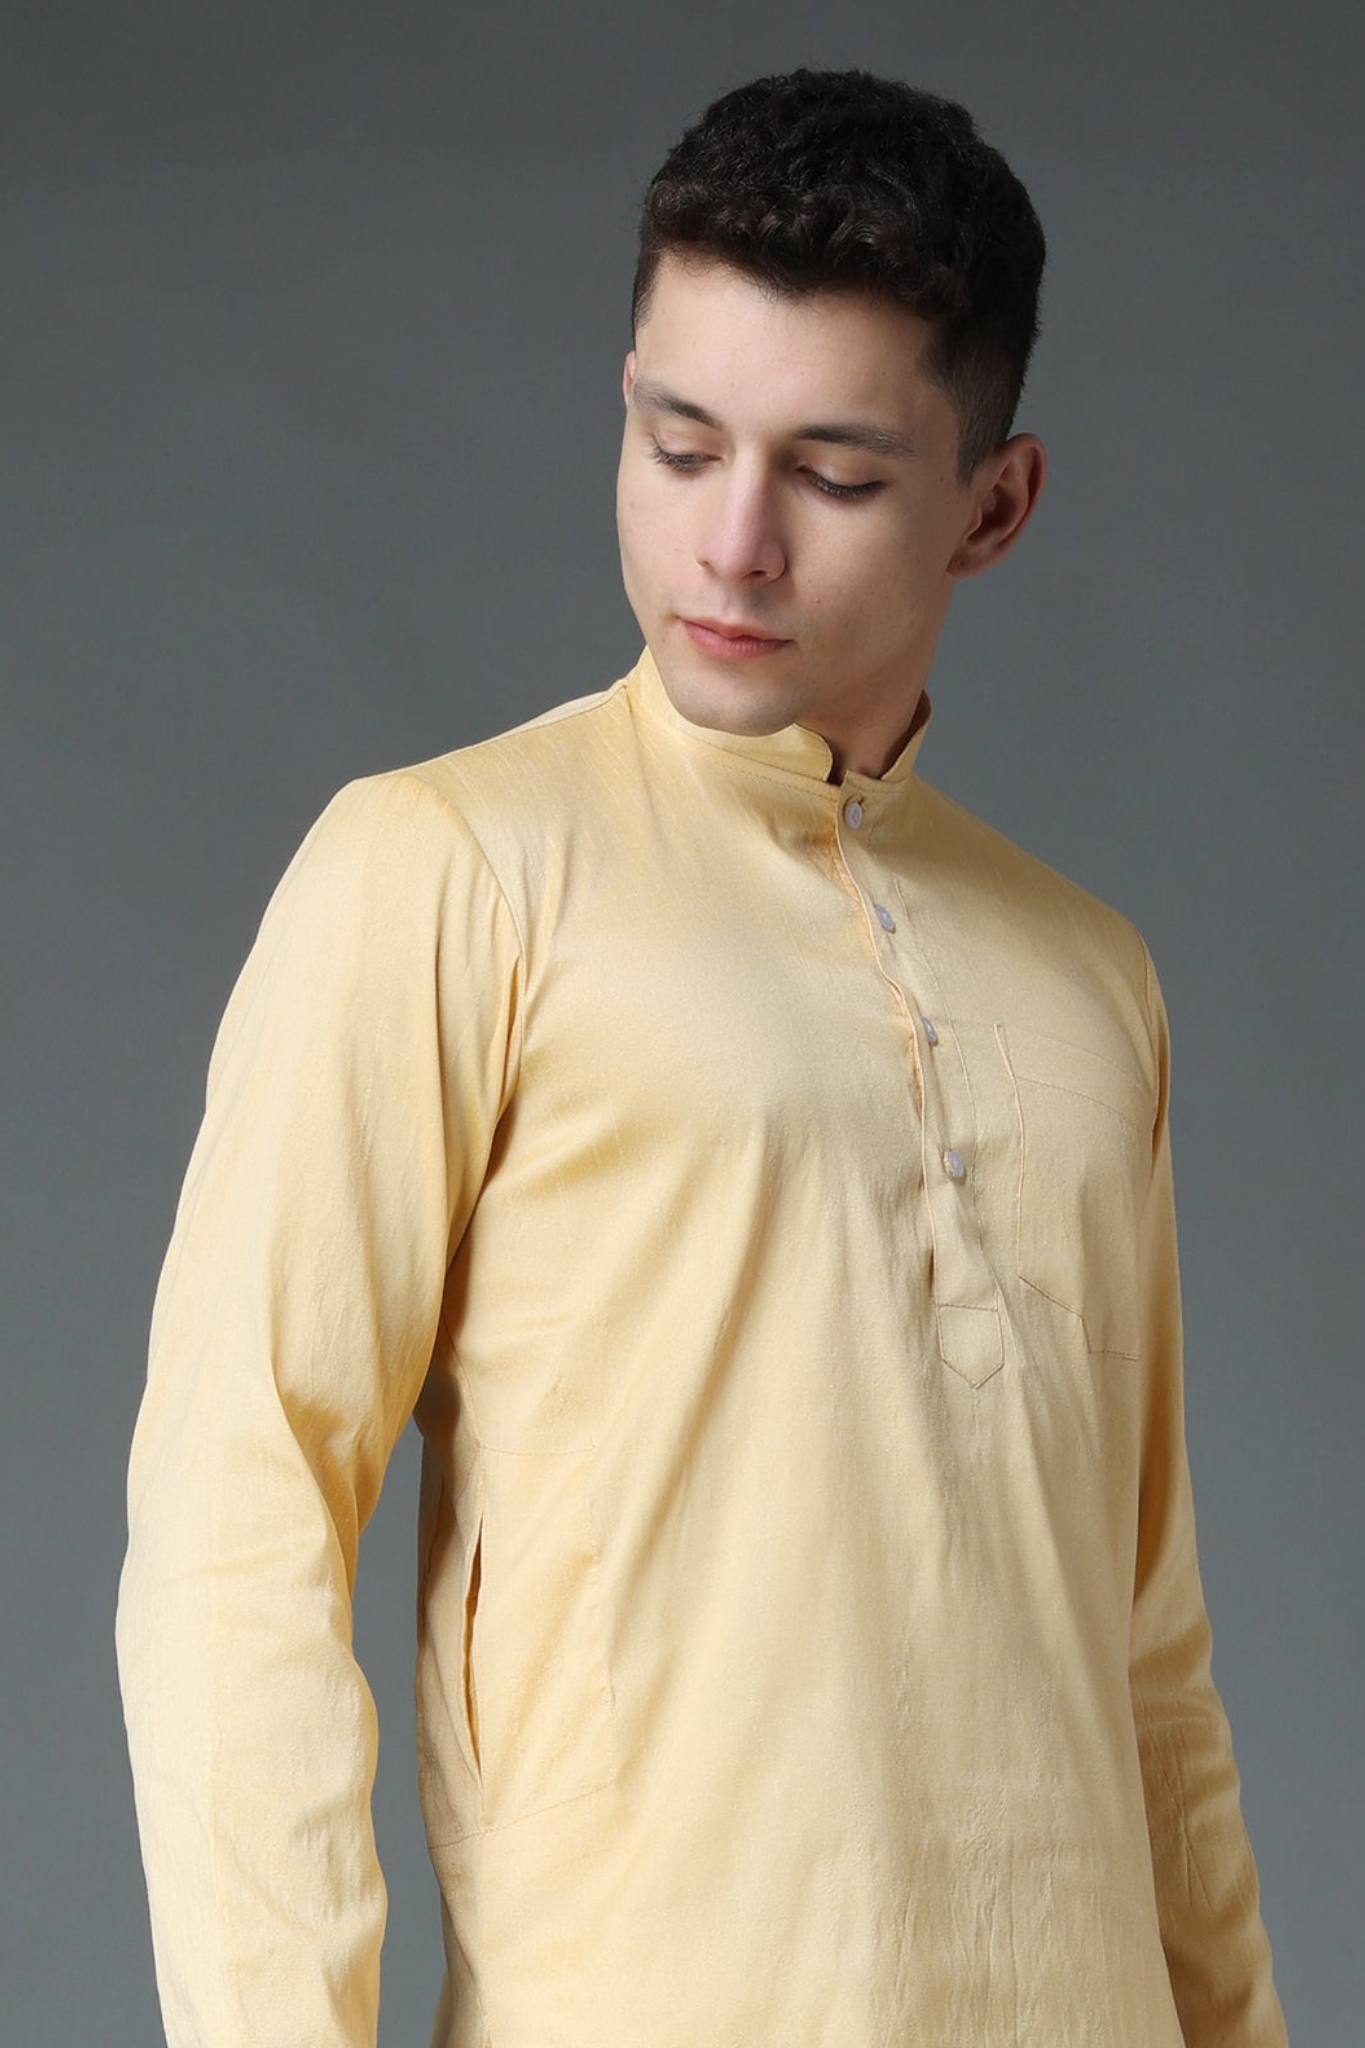 Men's Plus Size Men's Plus Size Buttermilk Yellow Silk Kurta Pajama